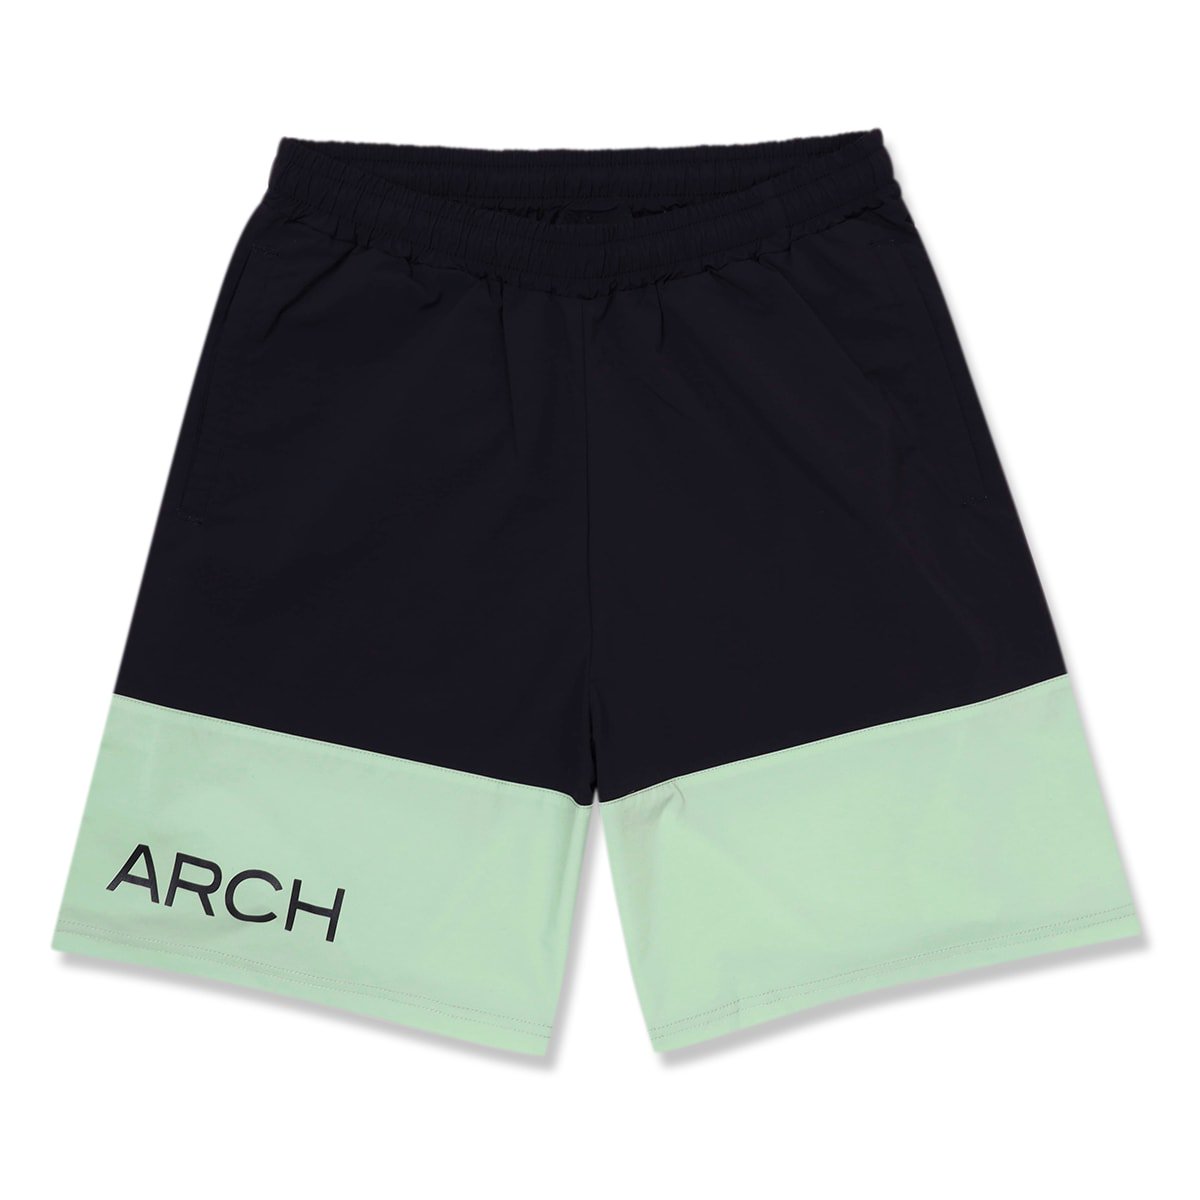 two-tone flex shorts【black/mist green】 - Arch ☆ アーチ 